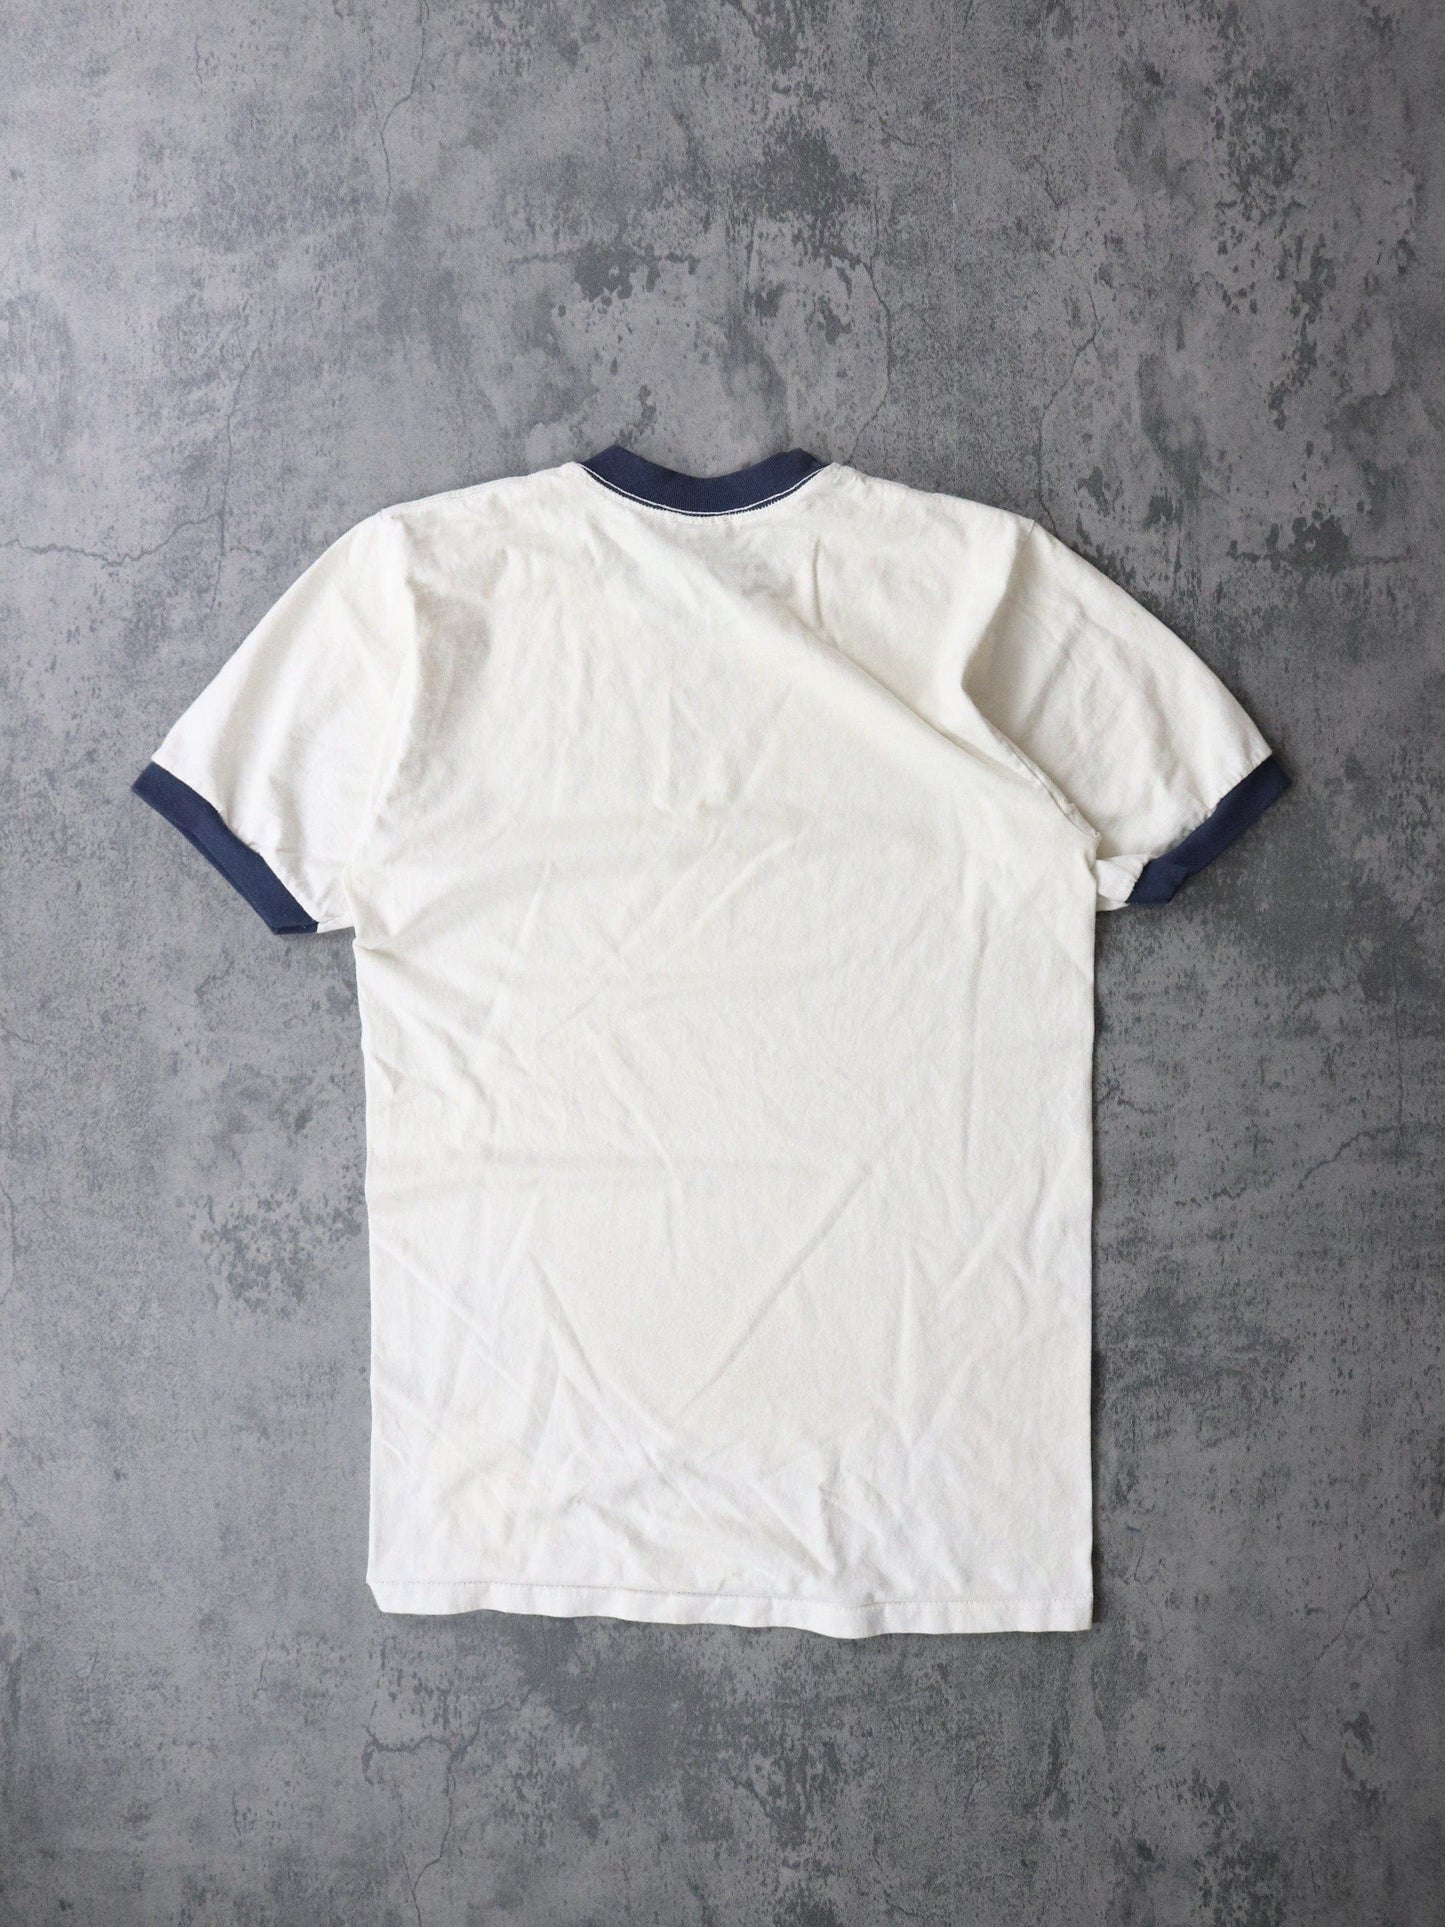 Other T-Shirts & Tank Tops Vintage USAFA T Shirt Mens Medium White USA Air Forrce Ringer 90s